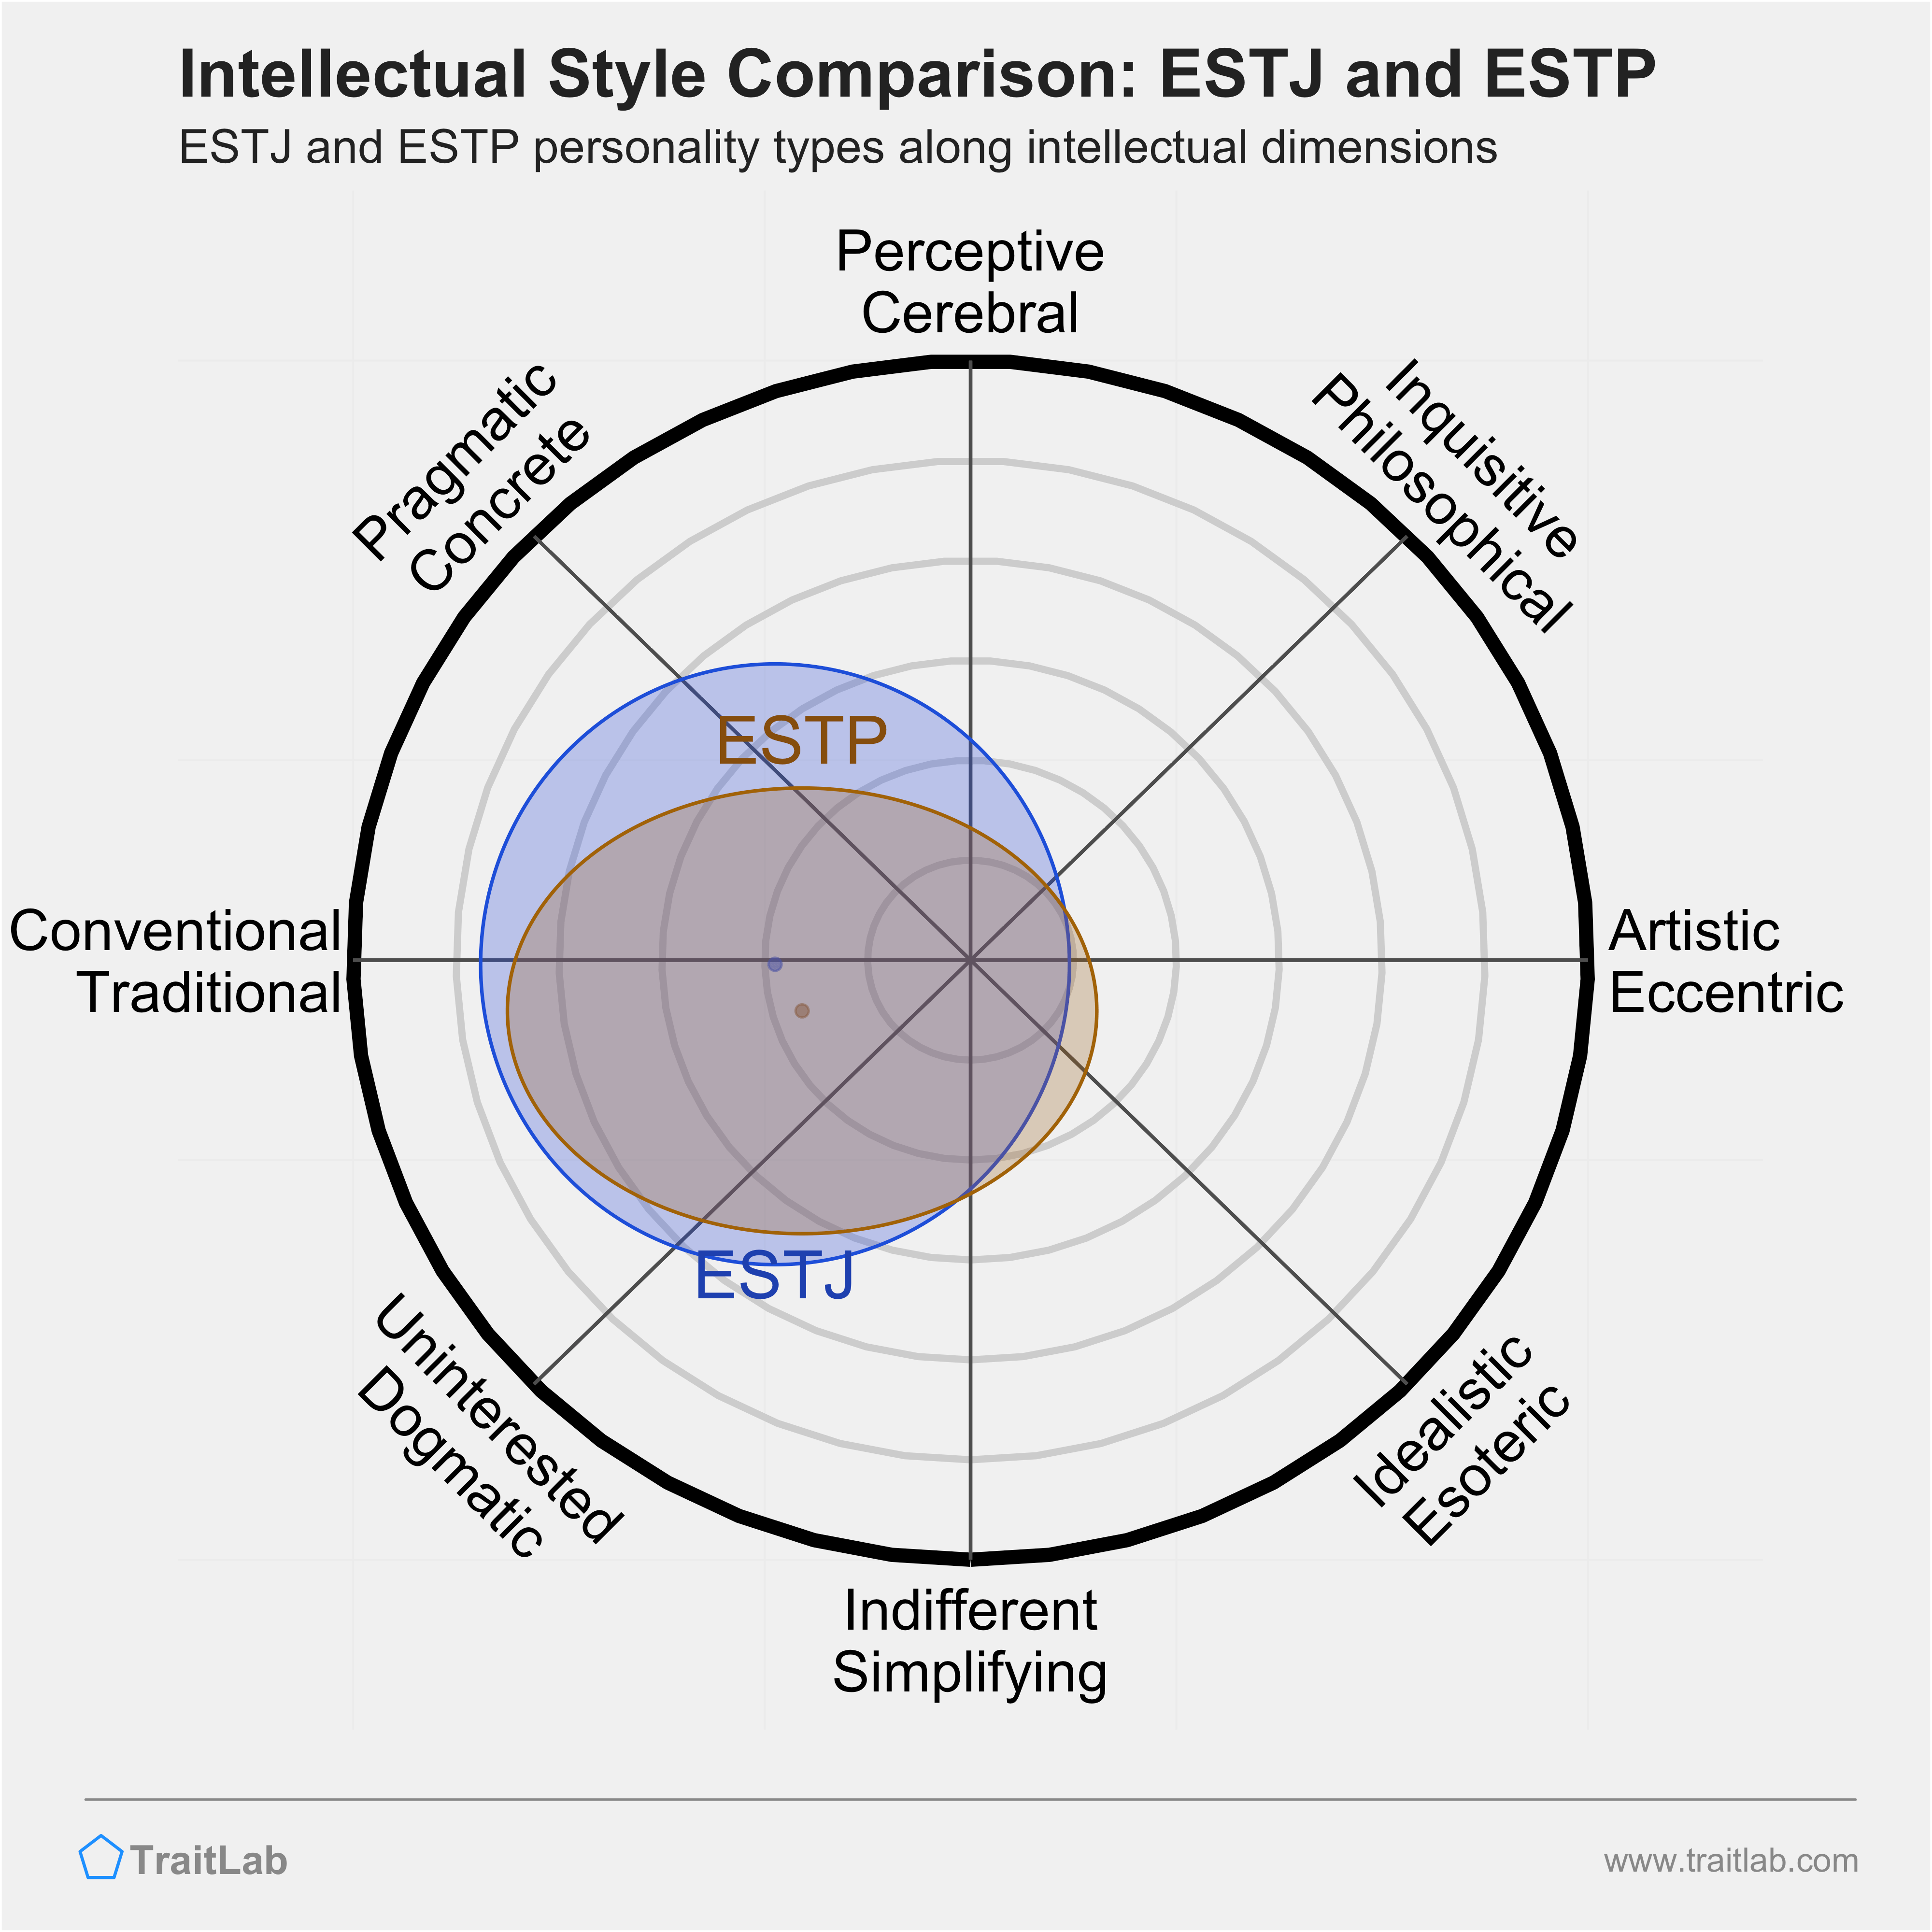 ESTJ and ESTP comparison across intellectual dimensions